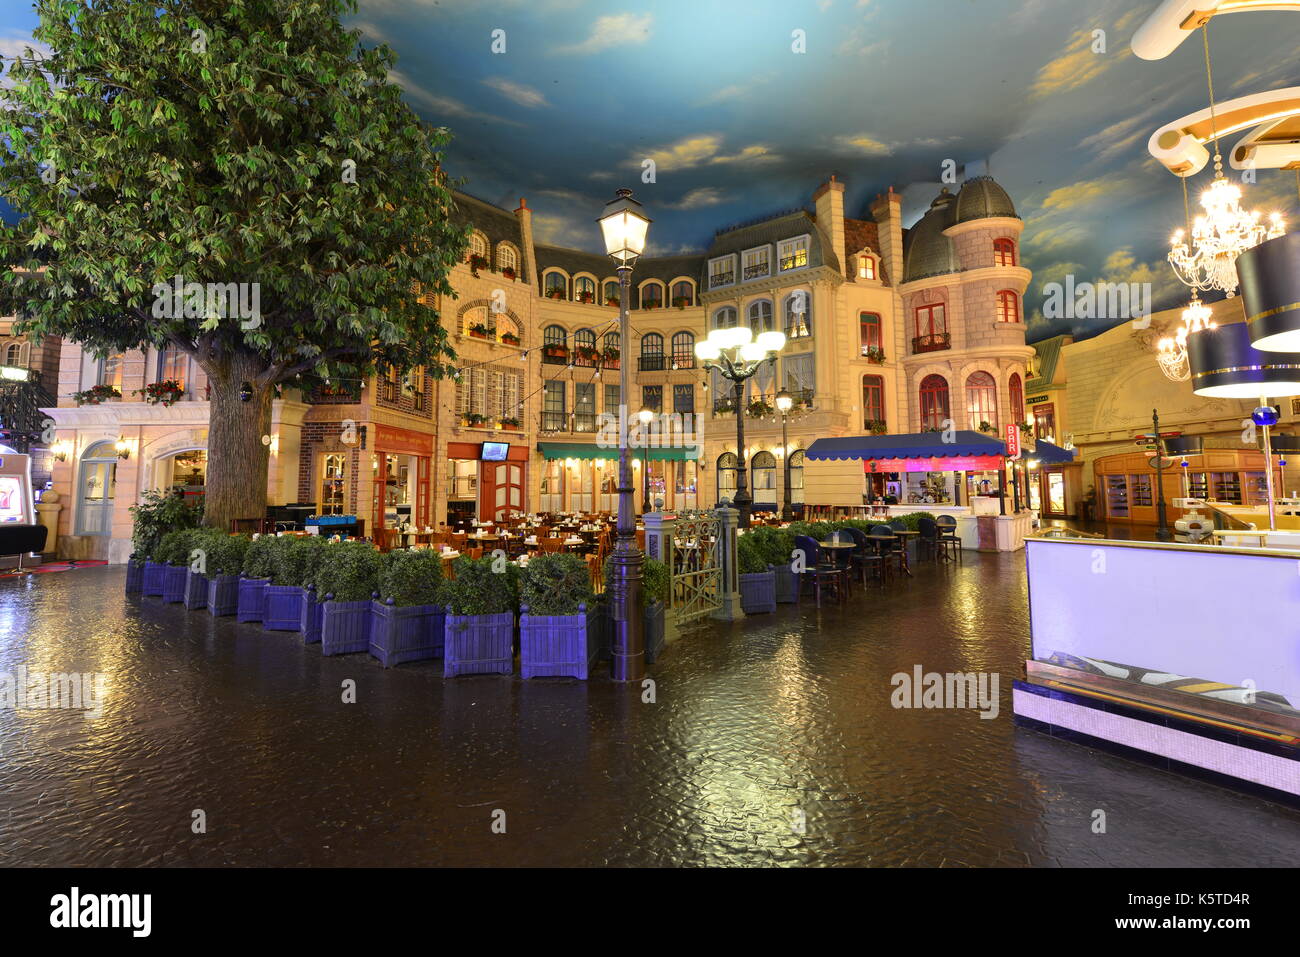 Download this stock image: Interior street scene Paris Hotel Las Vegas -  AHFK8W from Alamy's library of millio…